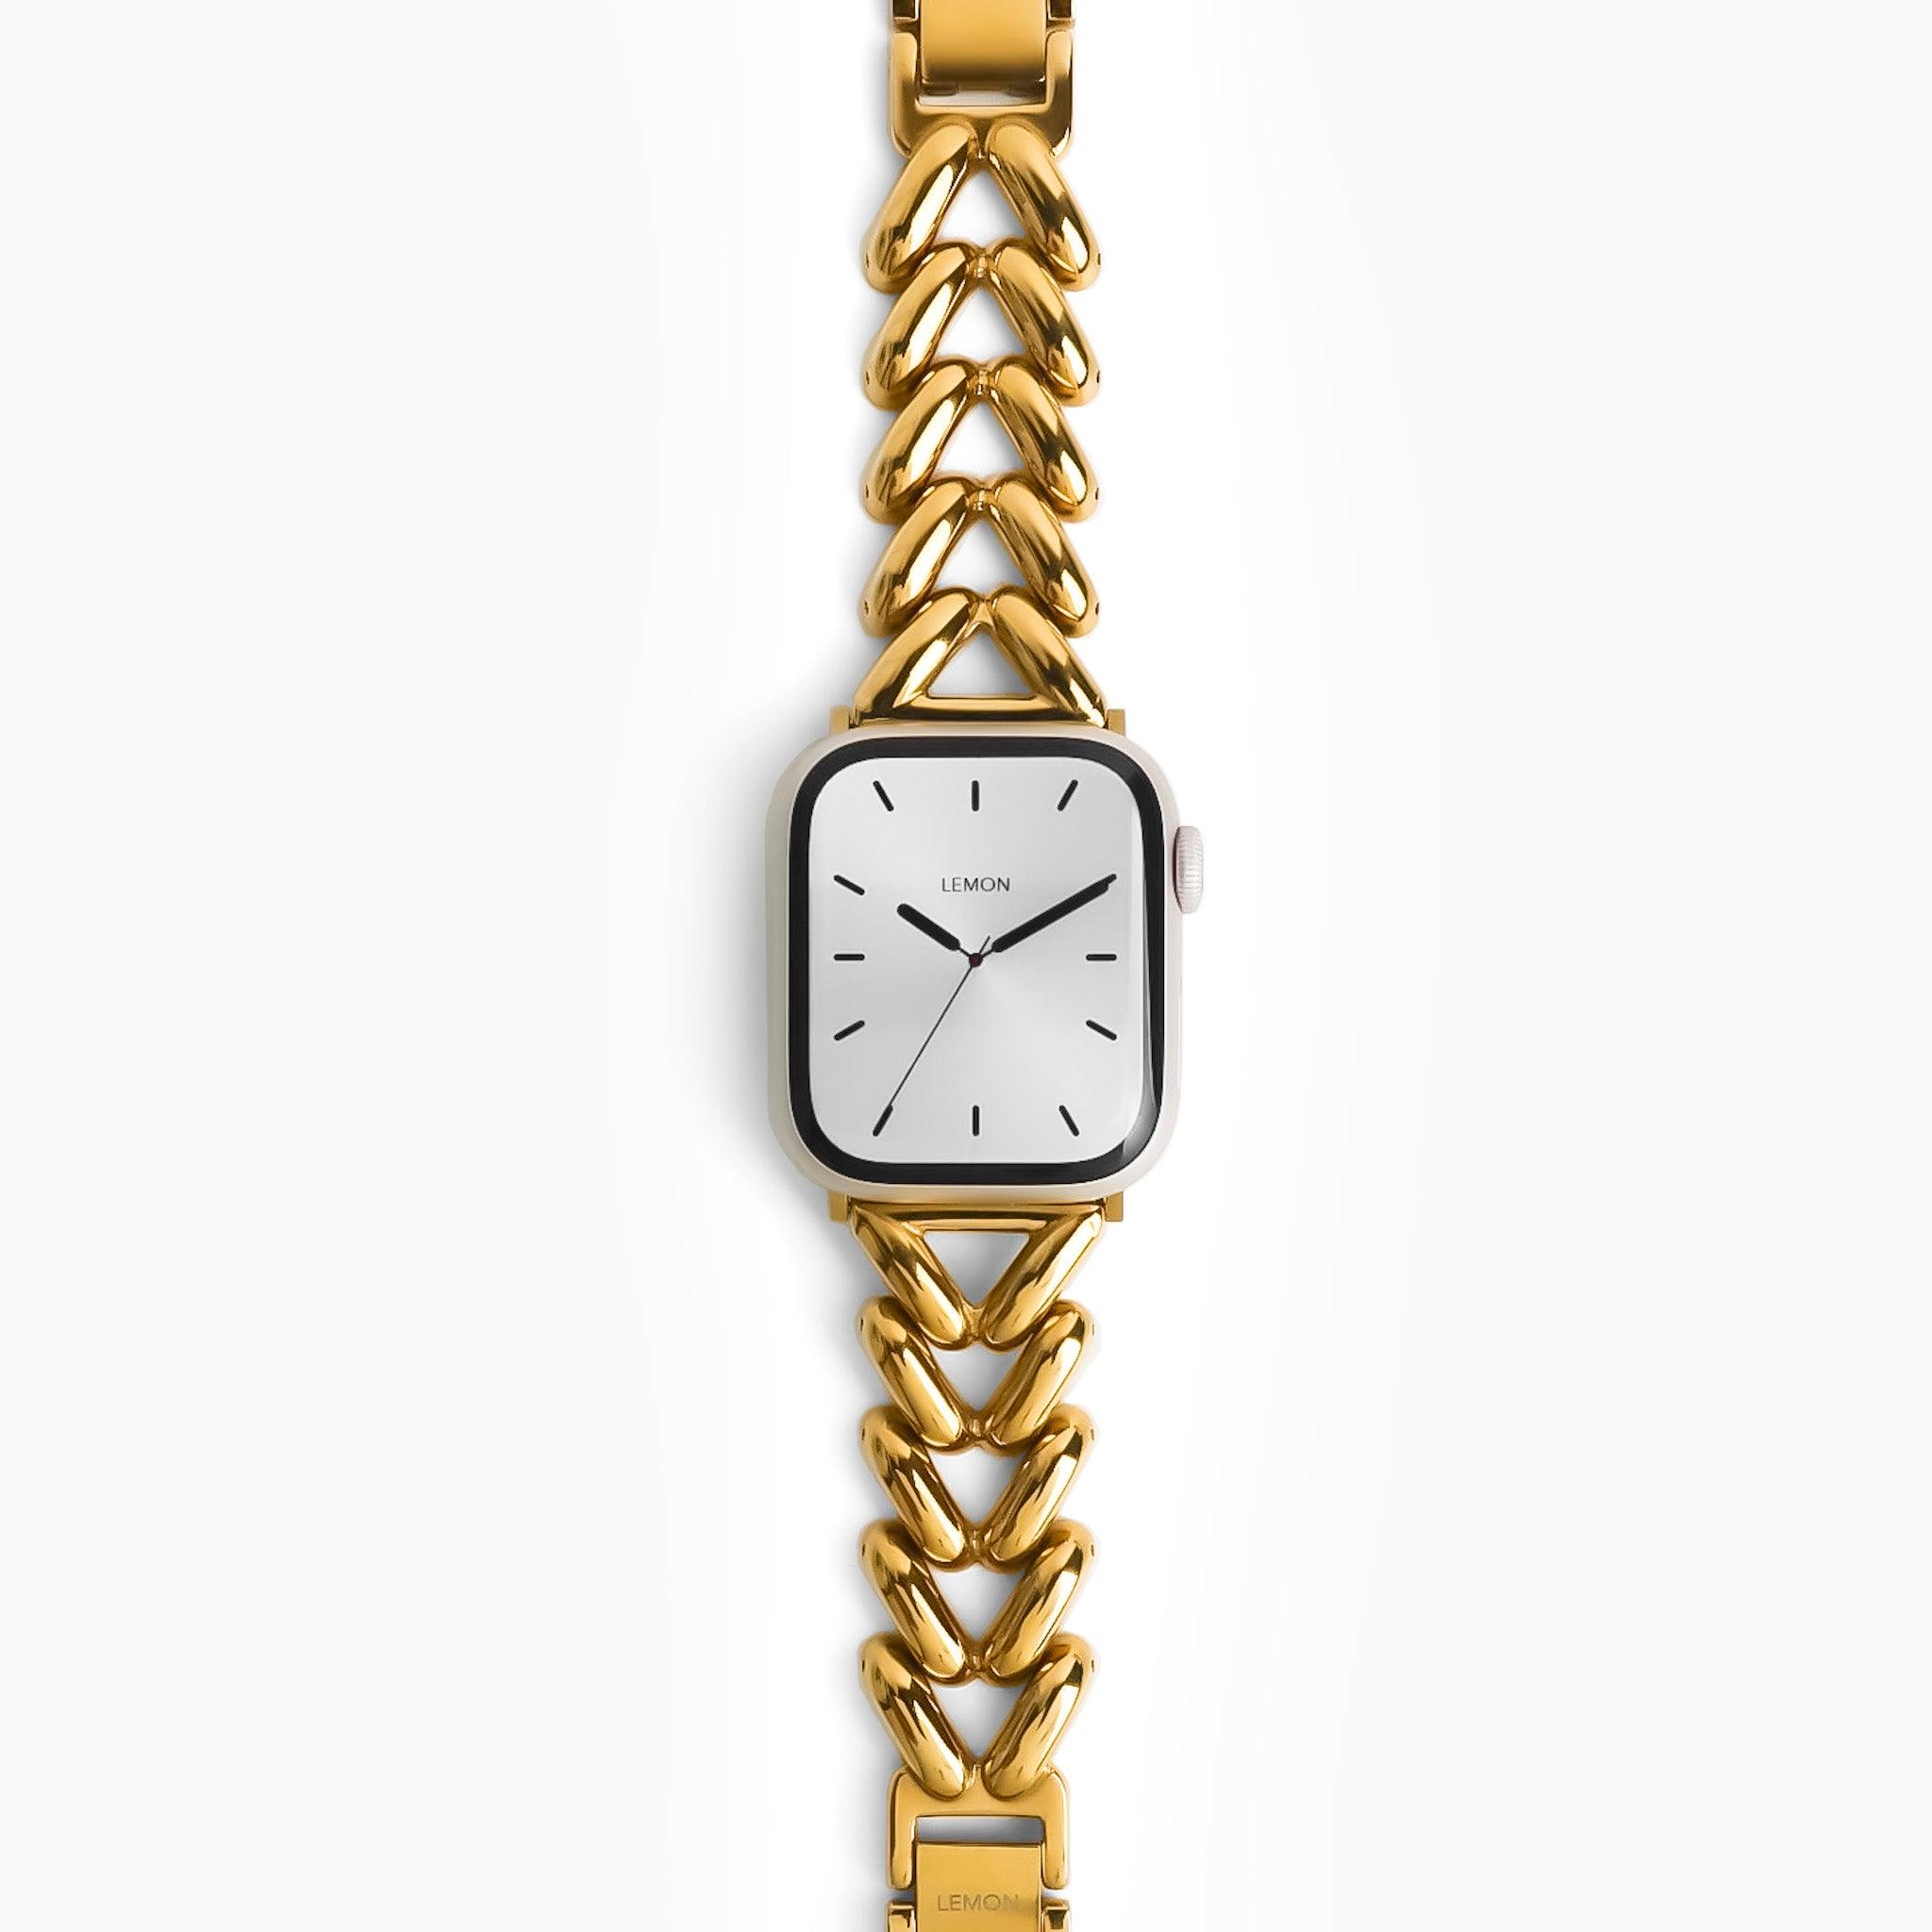 Lemon Straps | The Original Apple Watch Jewelry Brand